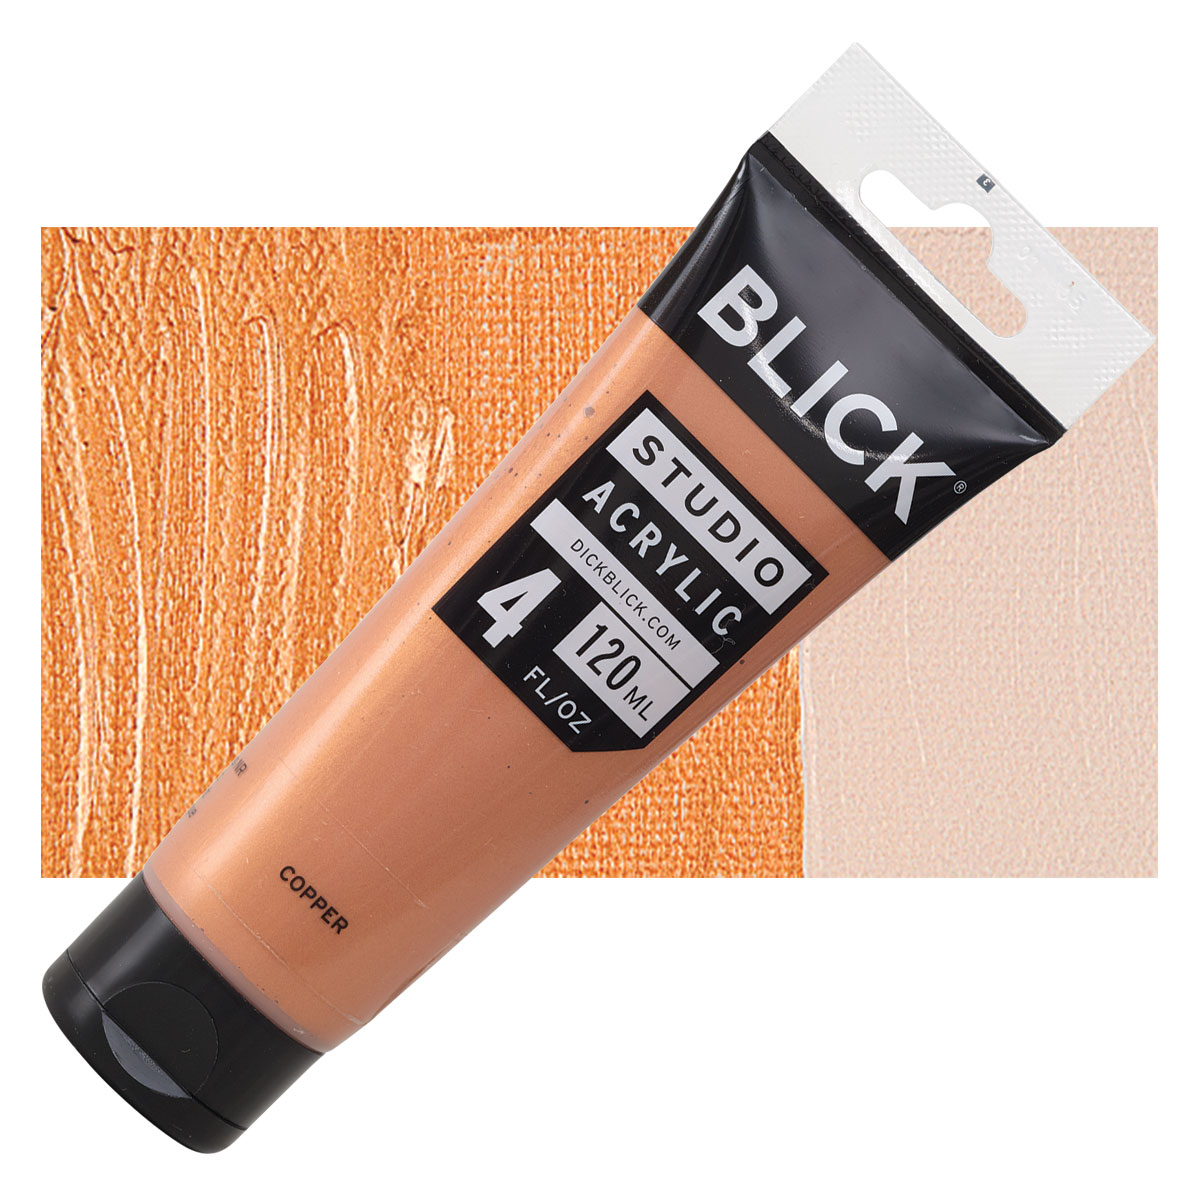 Blick Studio Acrylics - Flourescent Pink, 4 oz tube